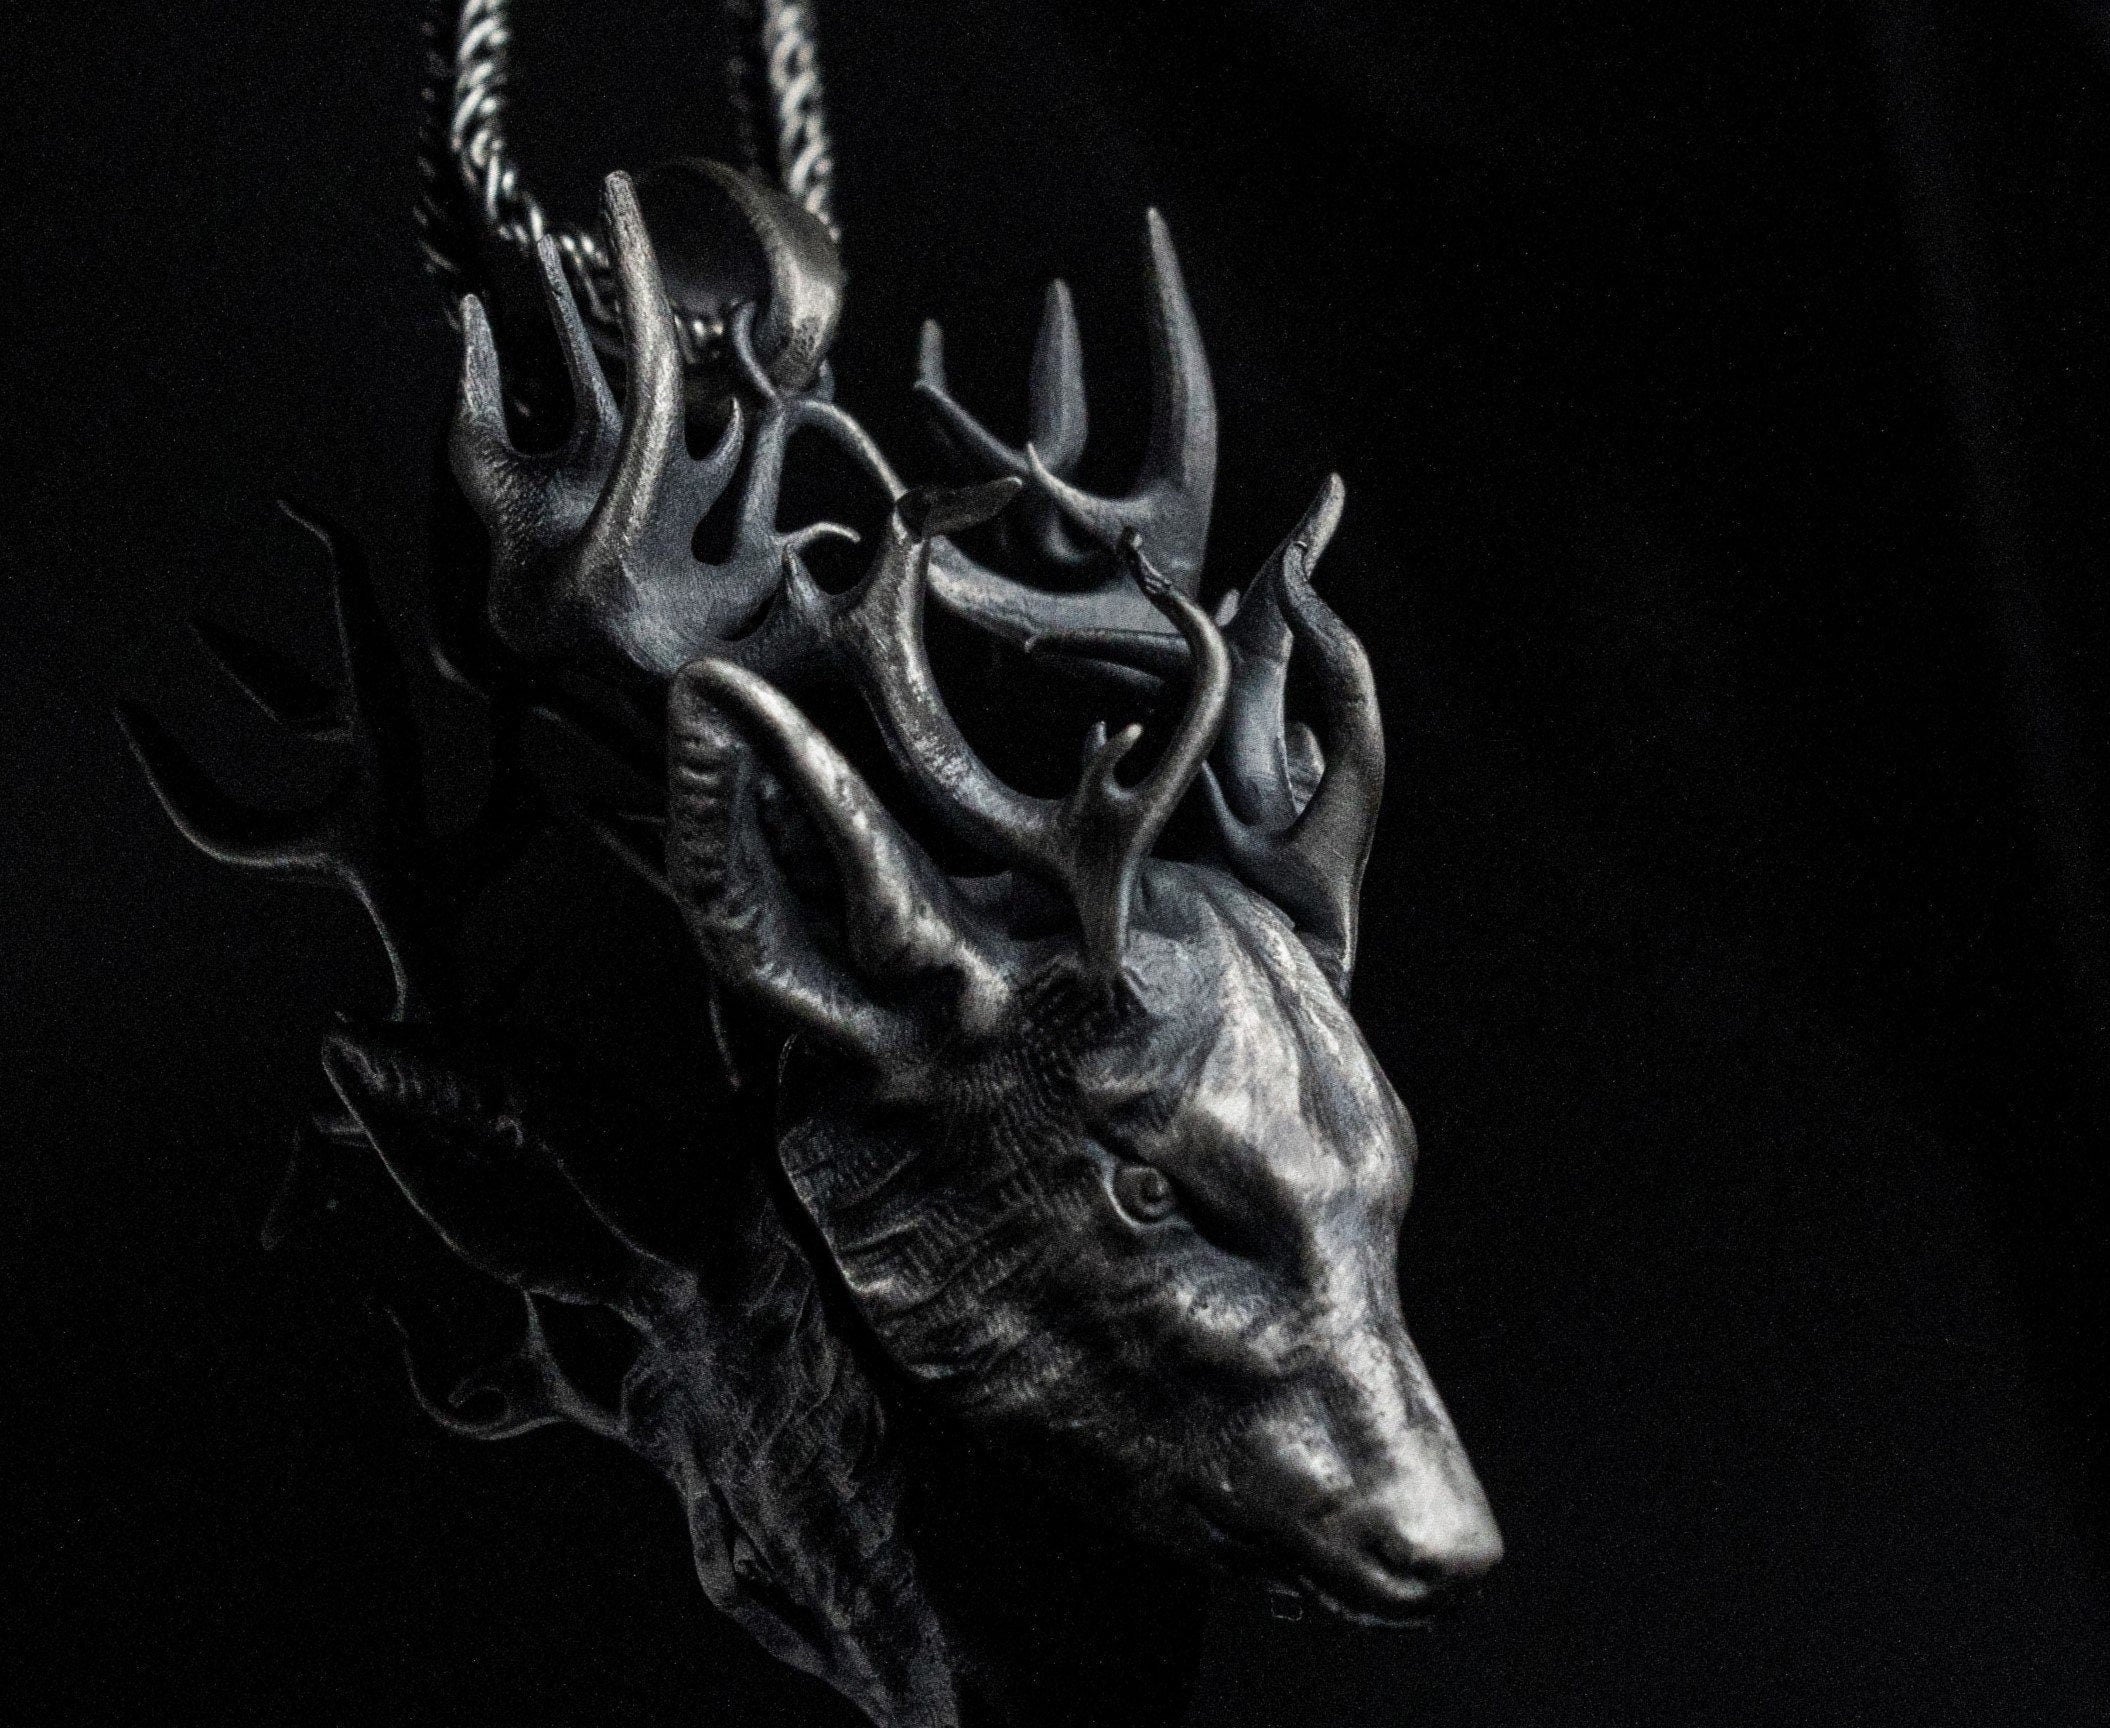 Deer Pendant, Silver Mens Jewelry